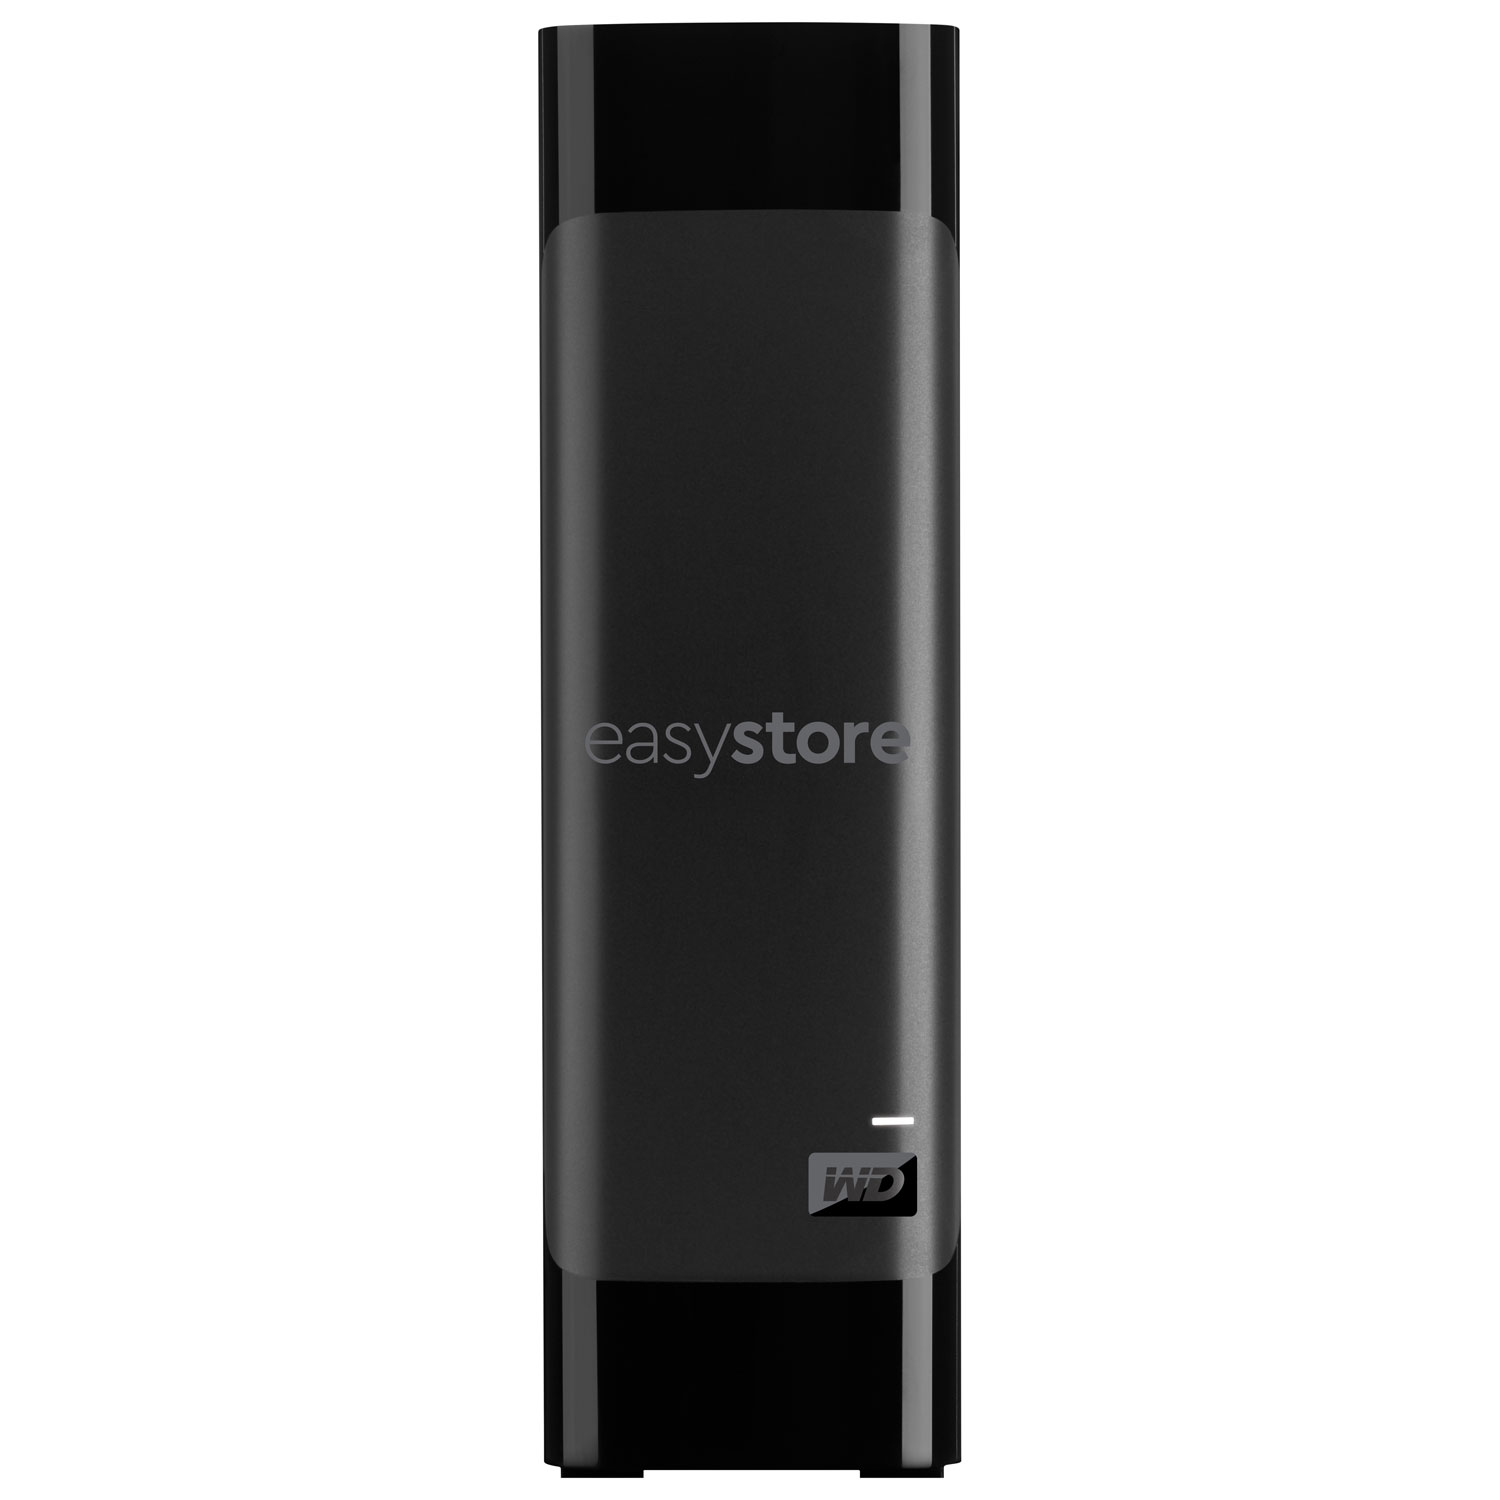 WD easystore 8TB USB 3.0 Desktop External Hard Drive